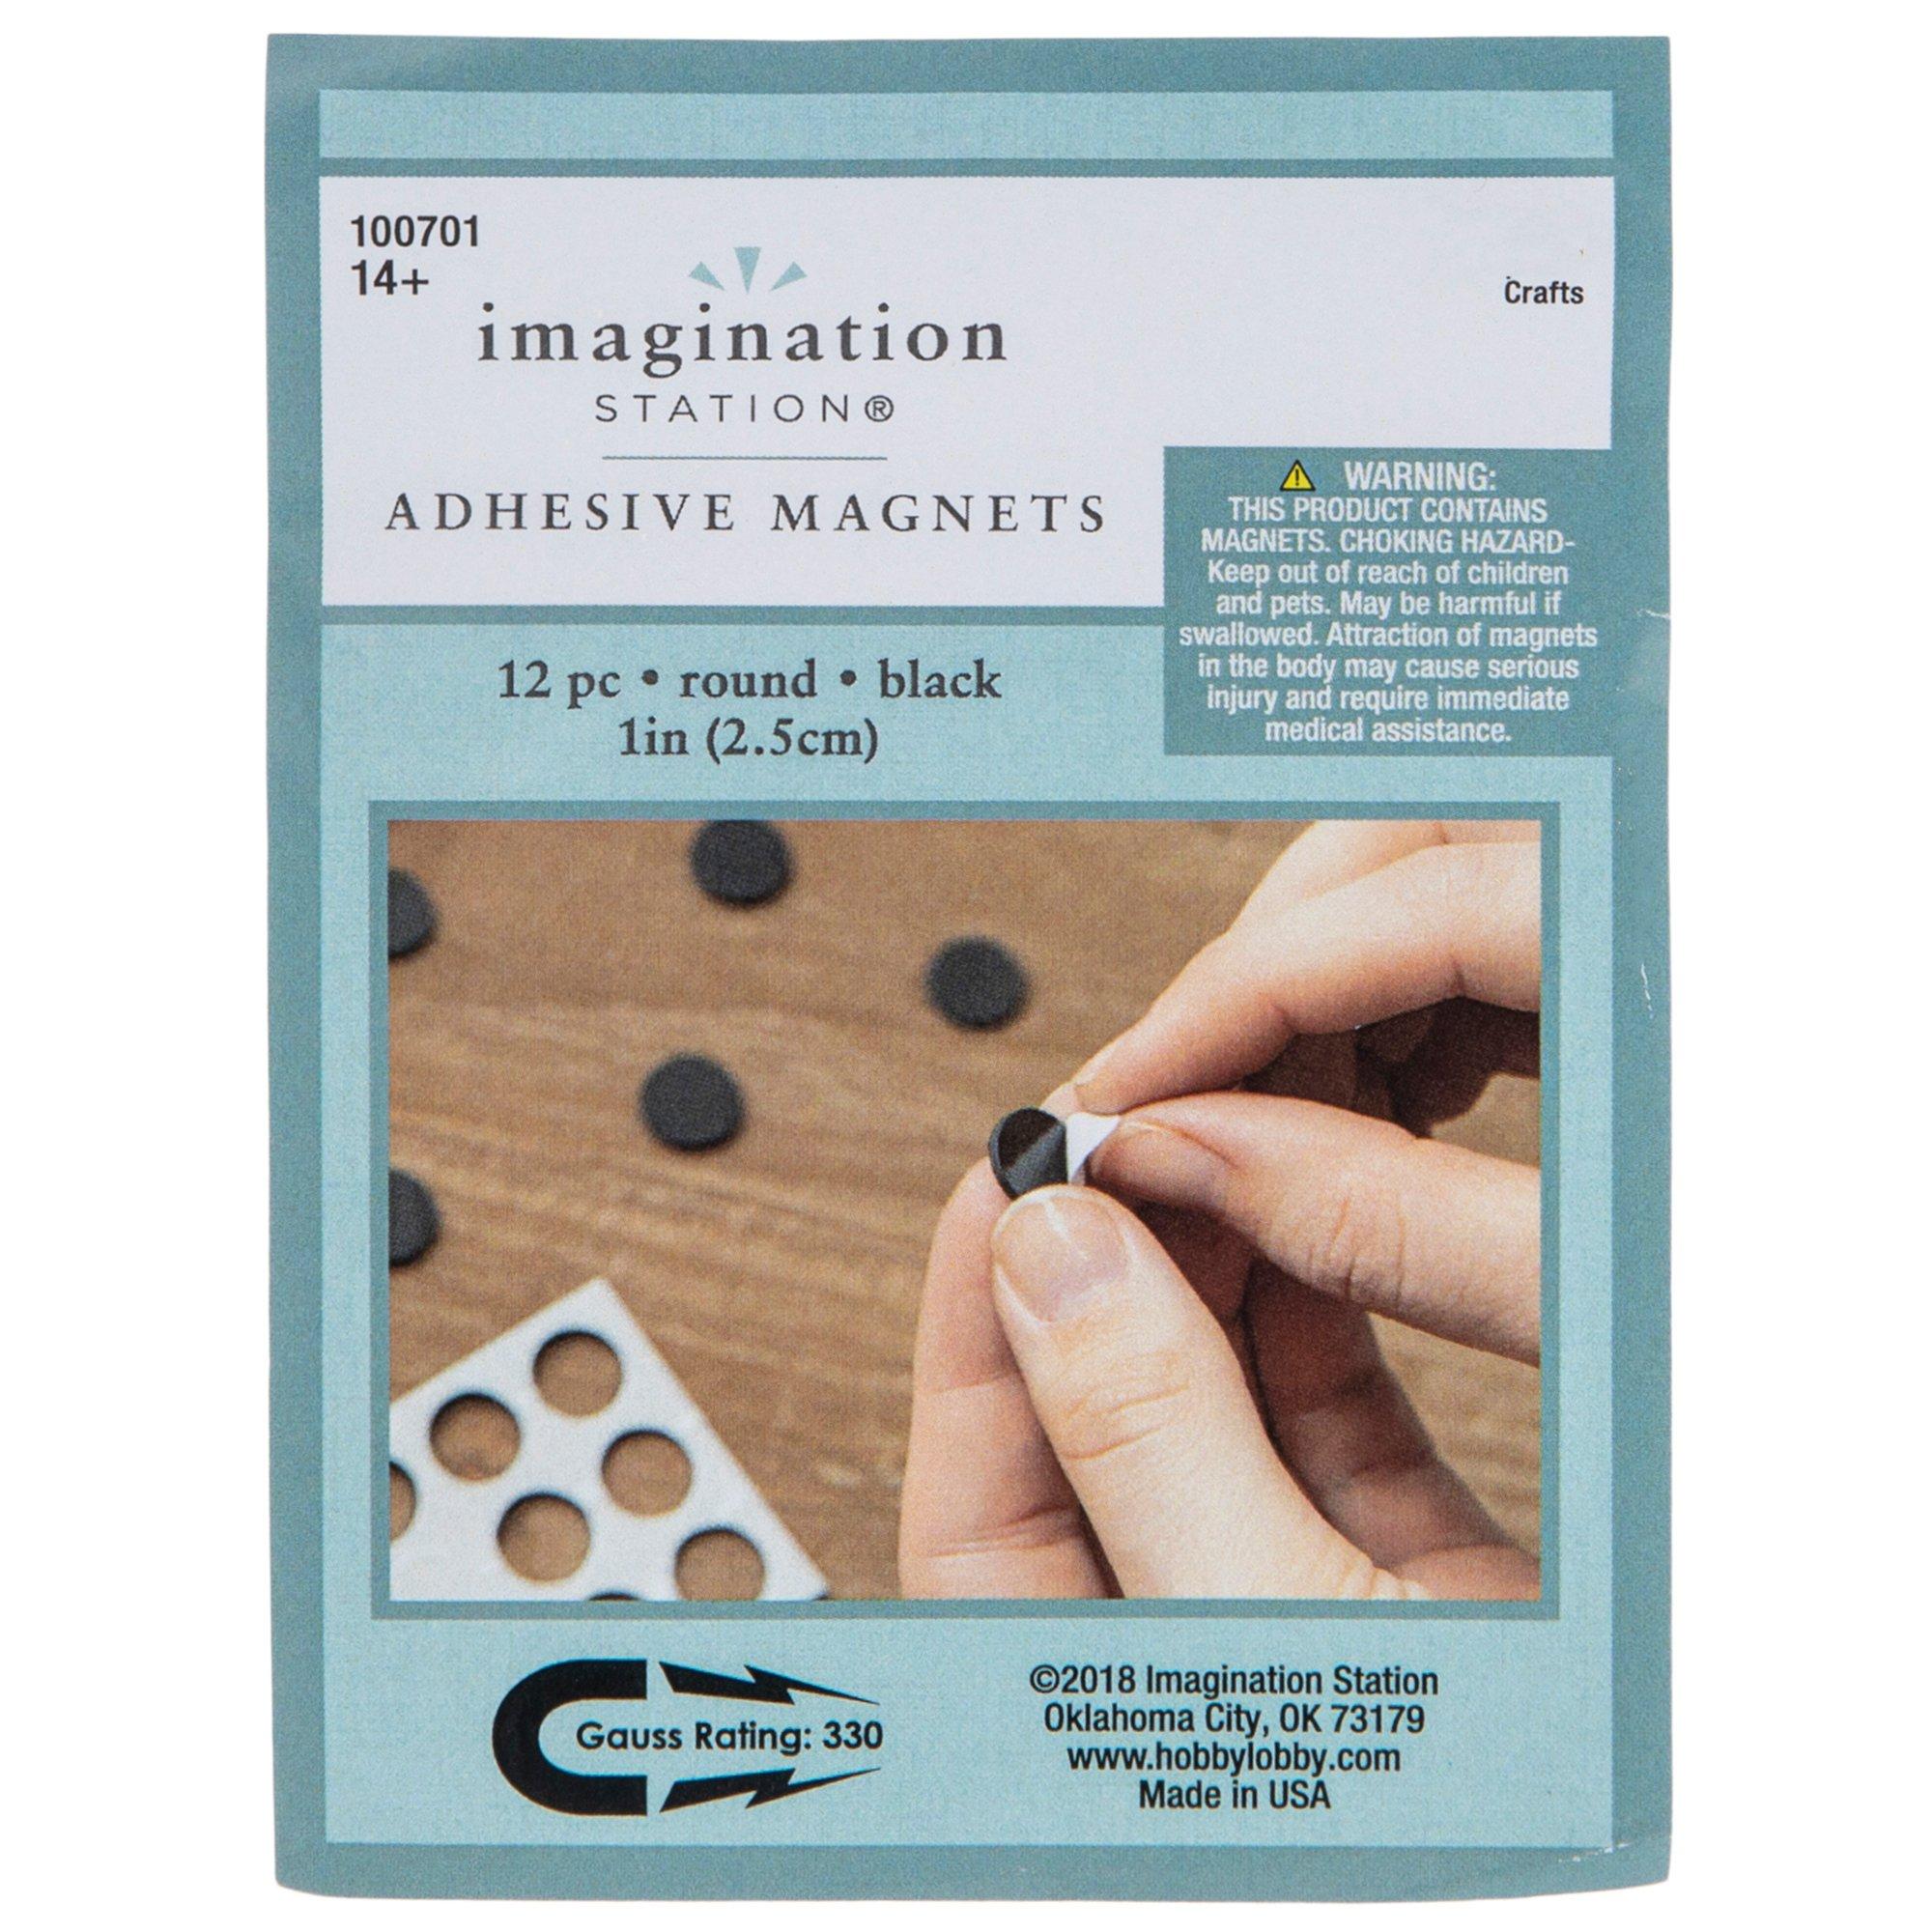 Round Adhesive Craft Magnets 10 Pack